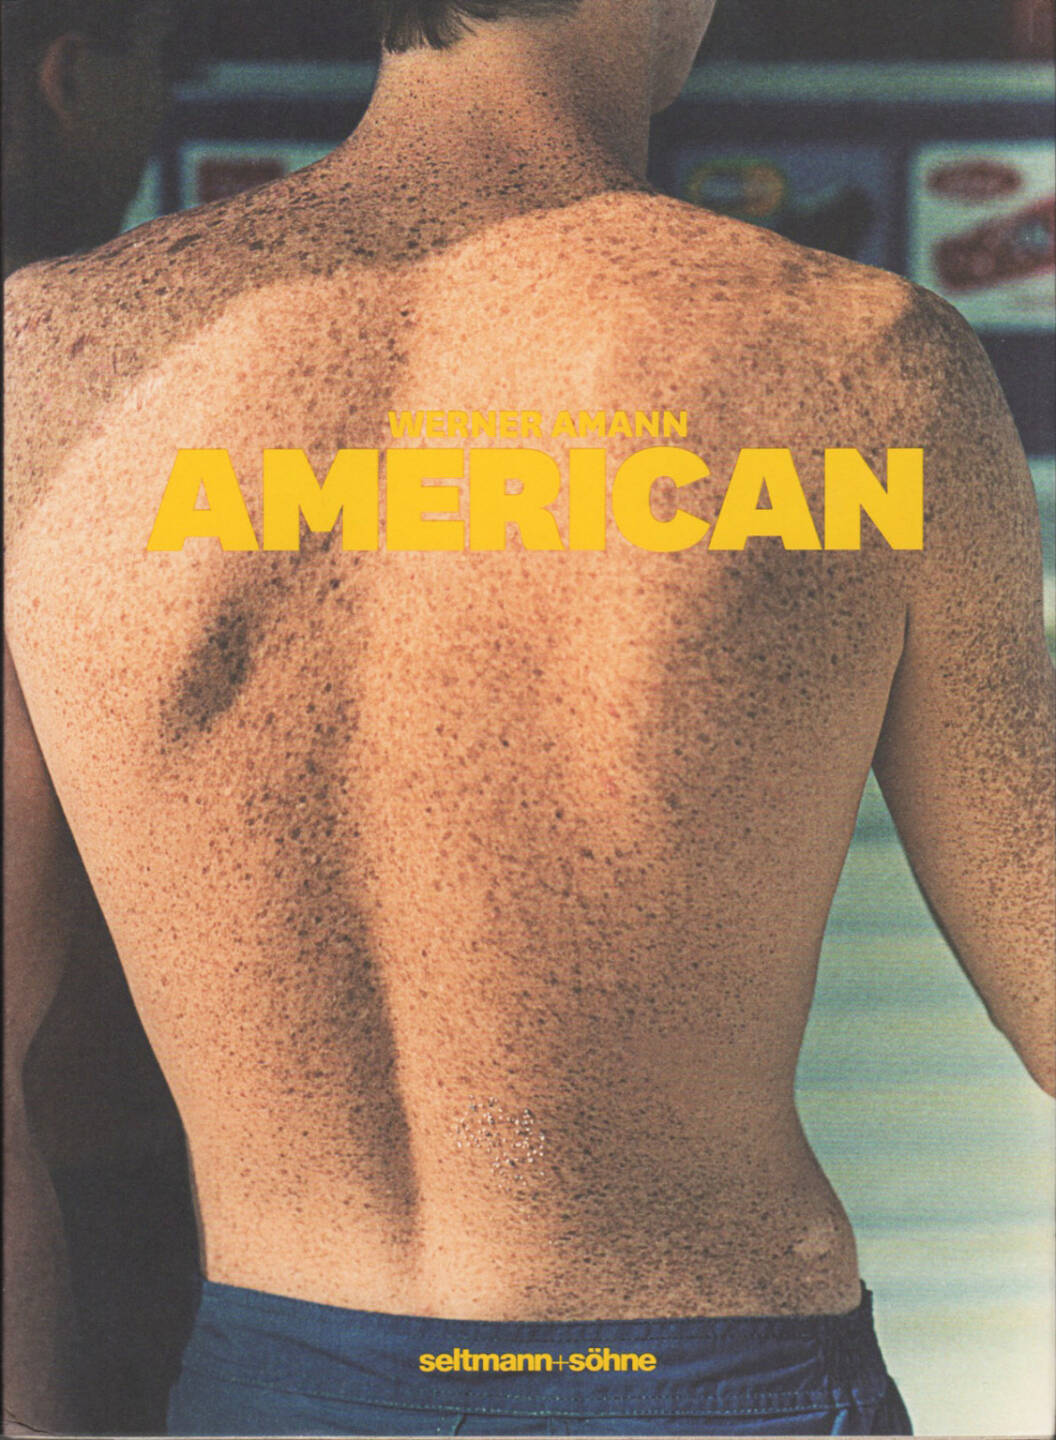 Werner Amann - American, seltmann+söhne 2010, Cover - http://josefchladek.com/book/werner_amann_-_american